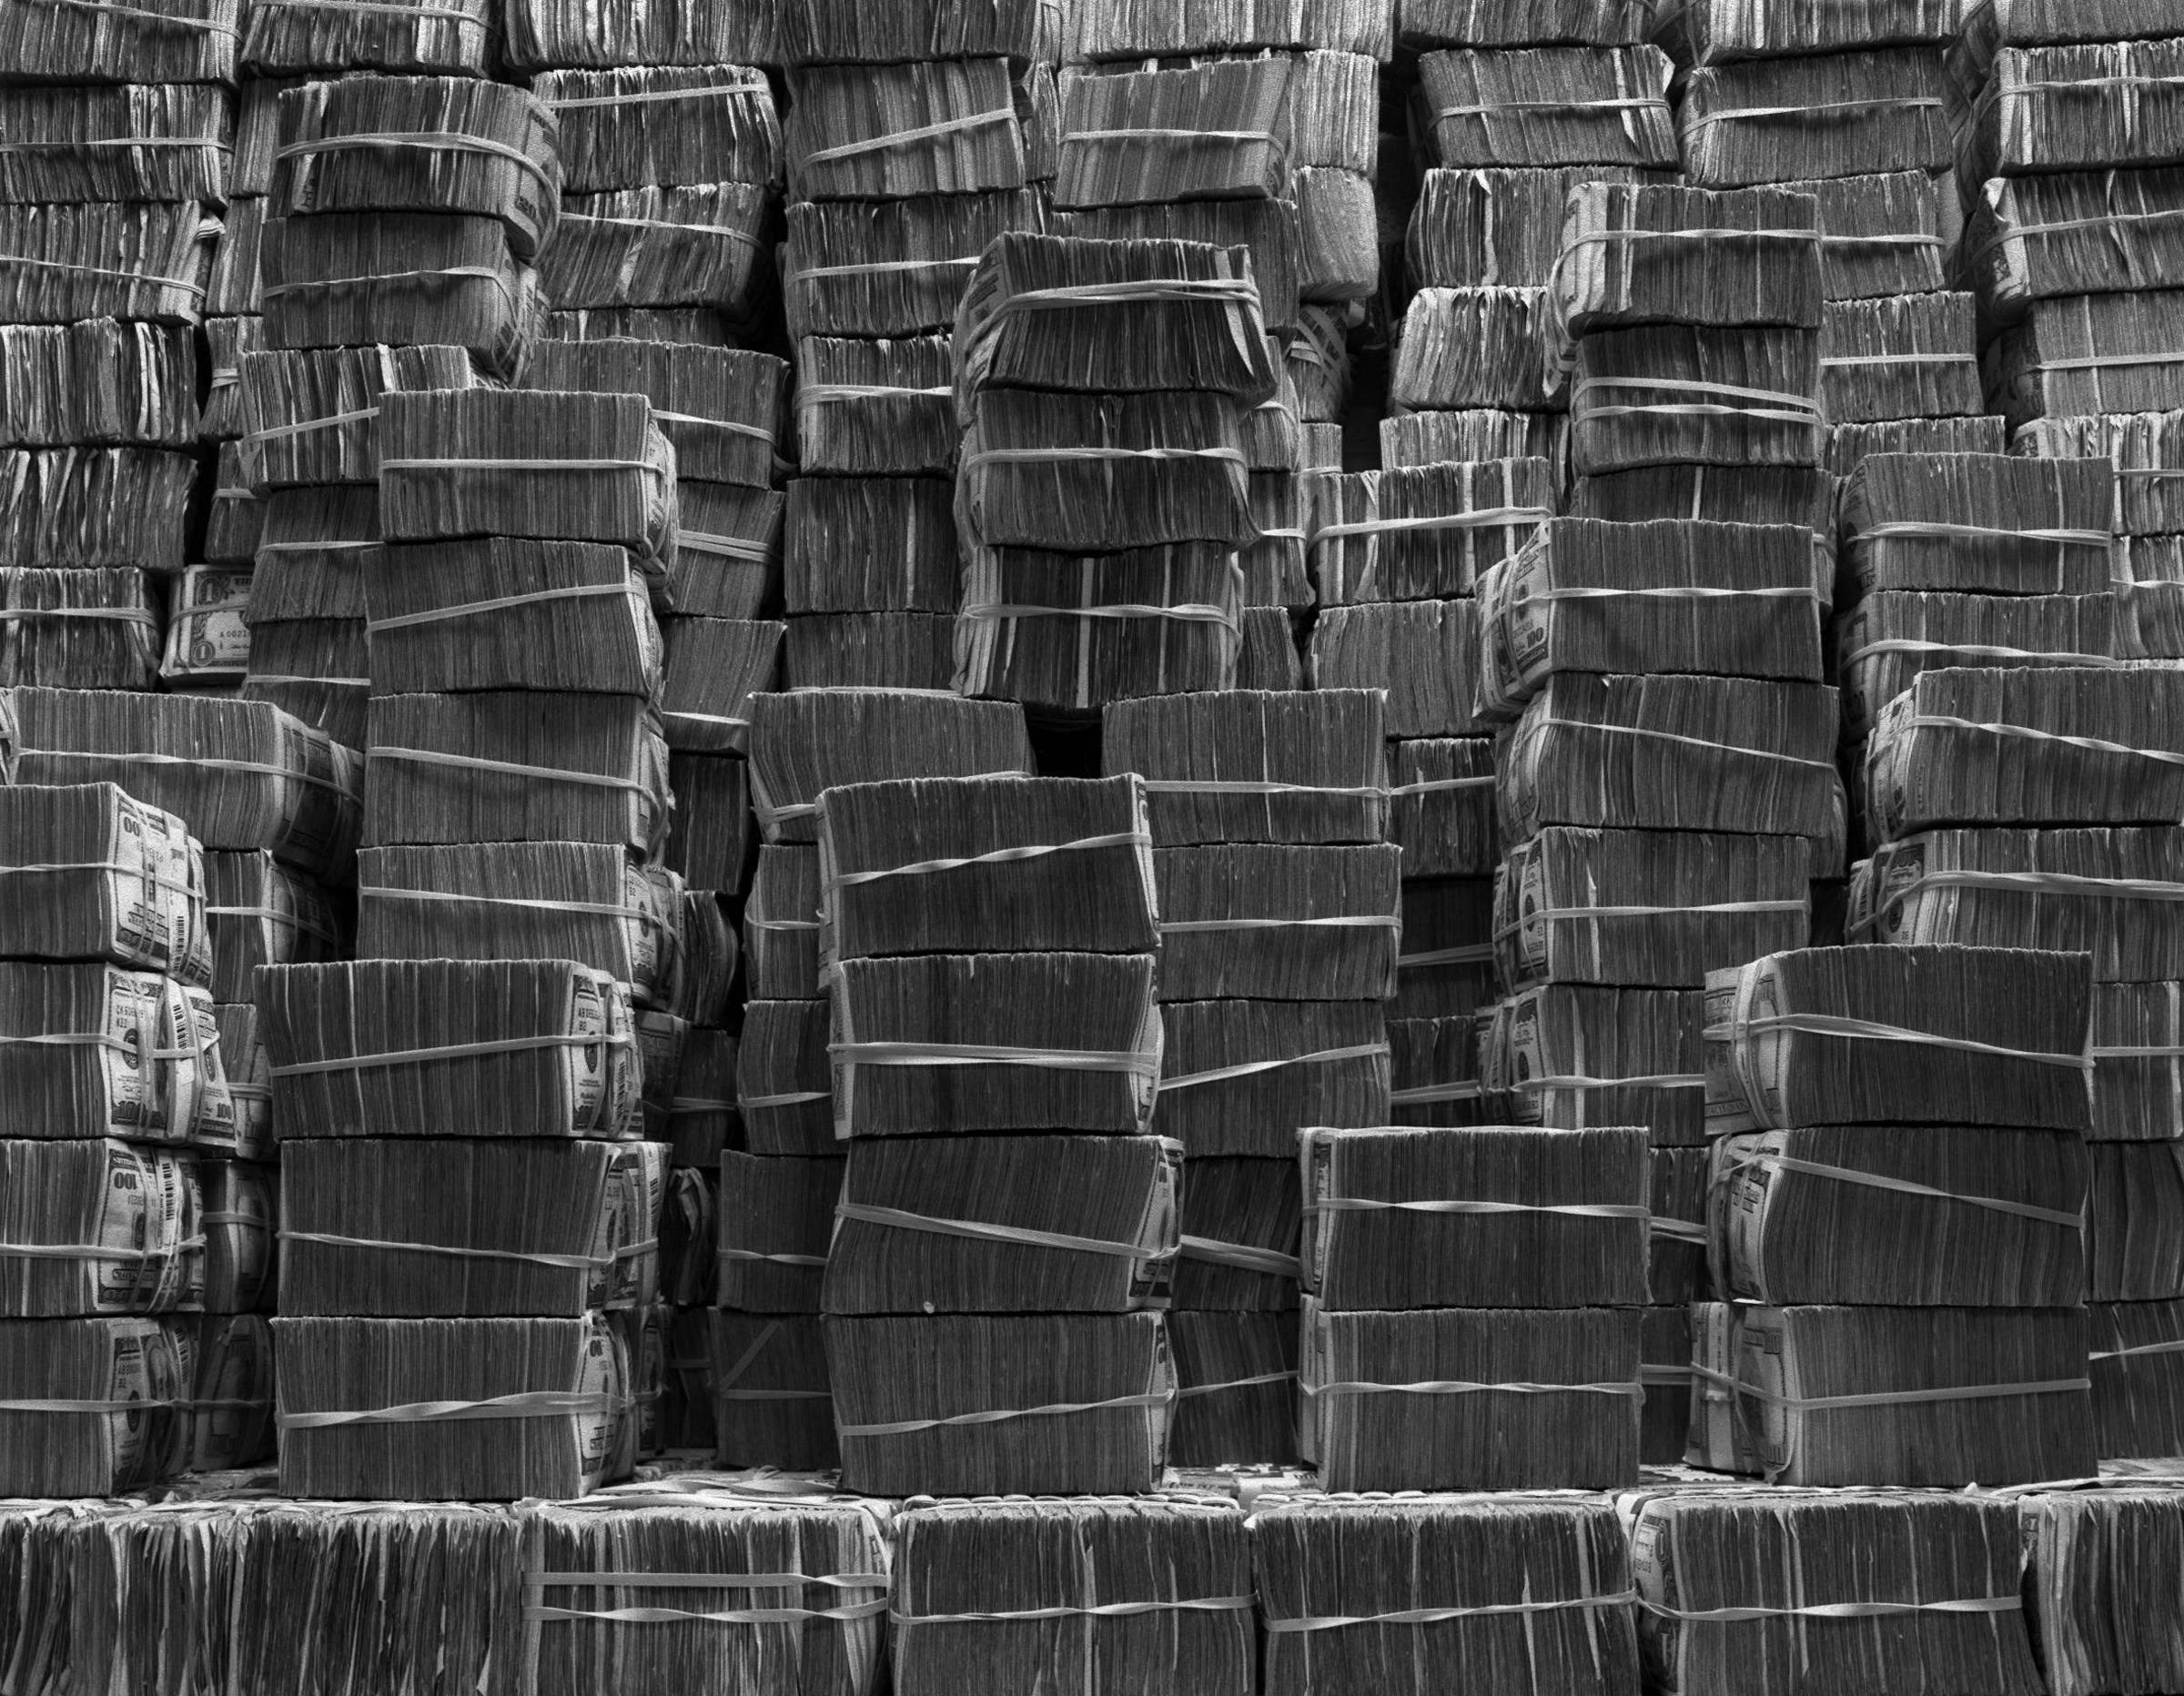 $7 Million - Abelardo Morell (Black and White Photography)